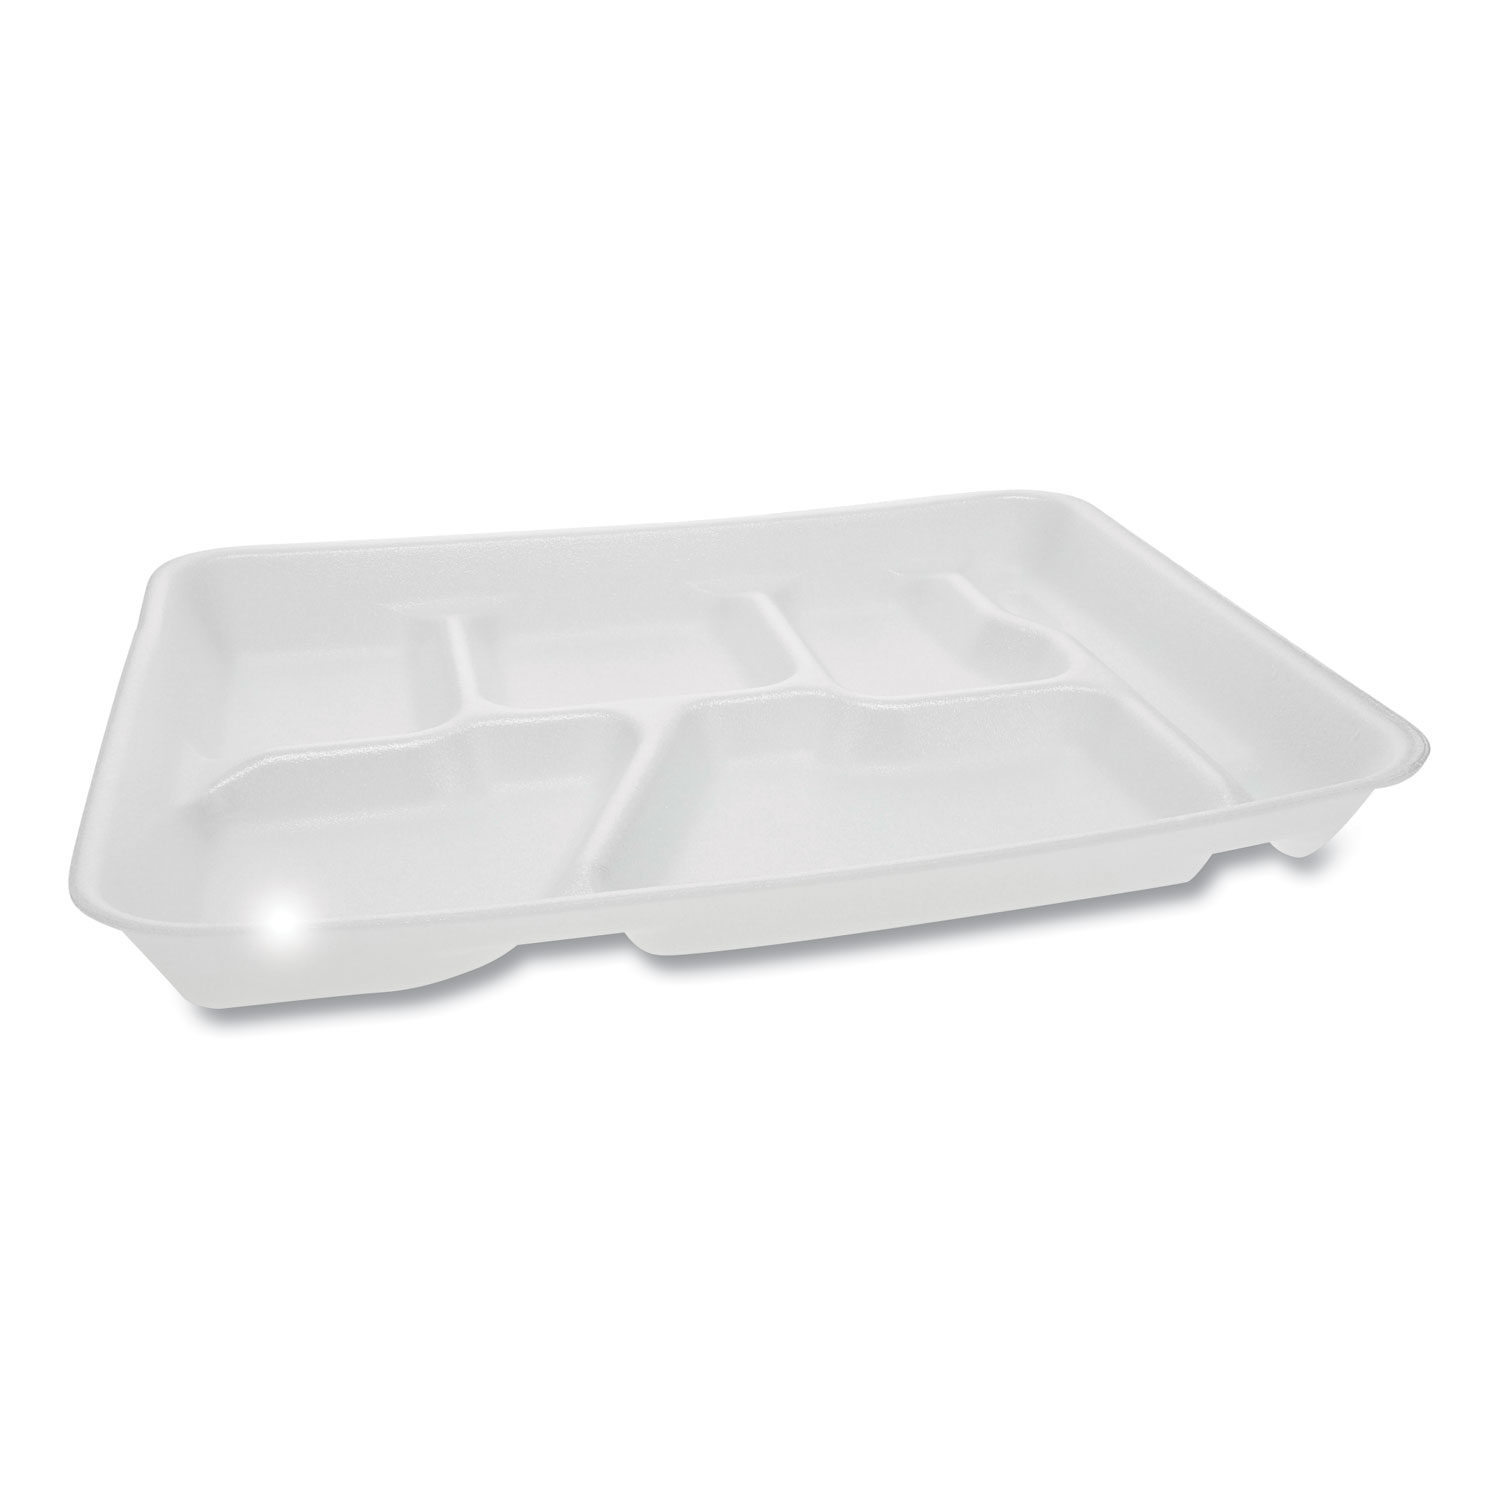  Pactiv 0TH10601SGBX Lightweight Foam School Trays, 6-Compartment, 8.5 x 11.5 x 1.25, White, 500/Carton (PCT0TH10601SGBX) 